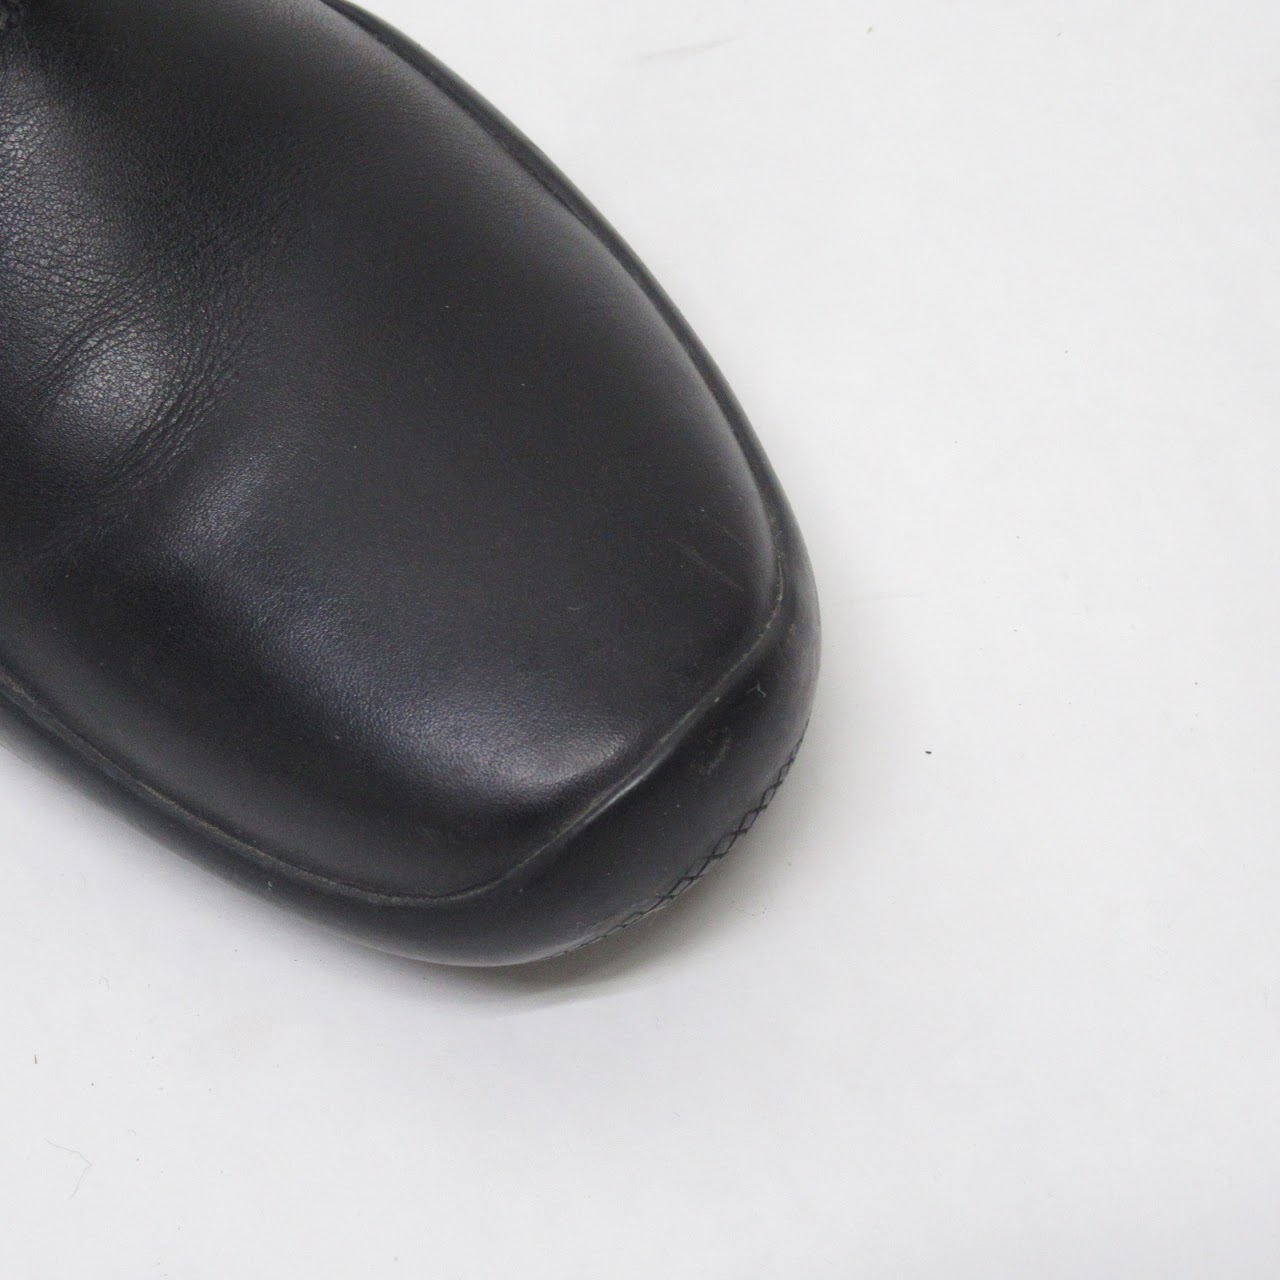 Prada Sport Leather Chelsea Boots